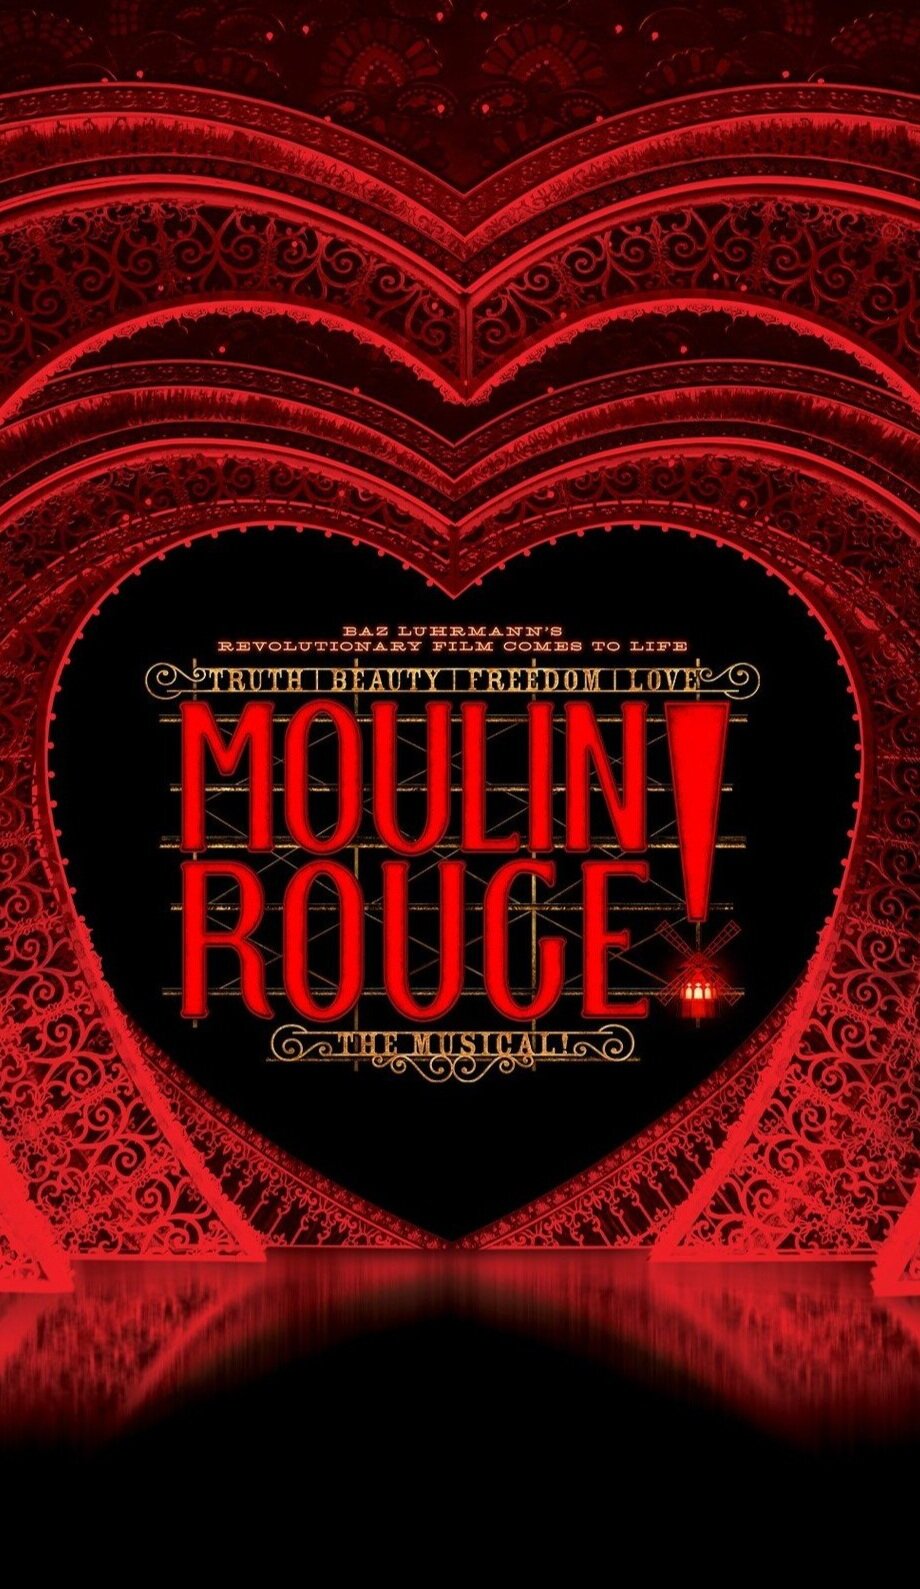 Moulin Rogue The Musical Australia . Helen Pandos Management. Global Creatures. Baz Lurhman. Top Agency representing Australia’s finest performers